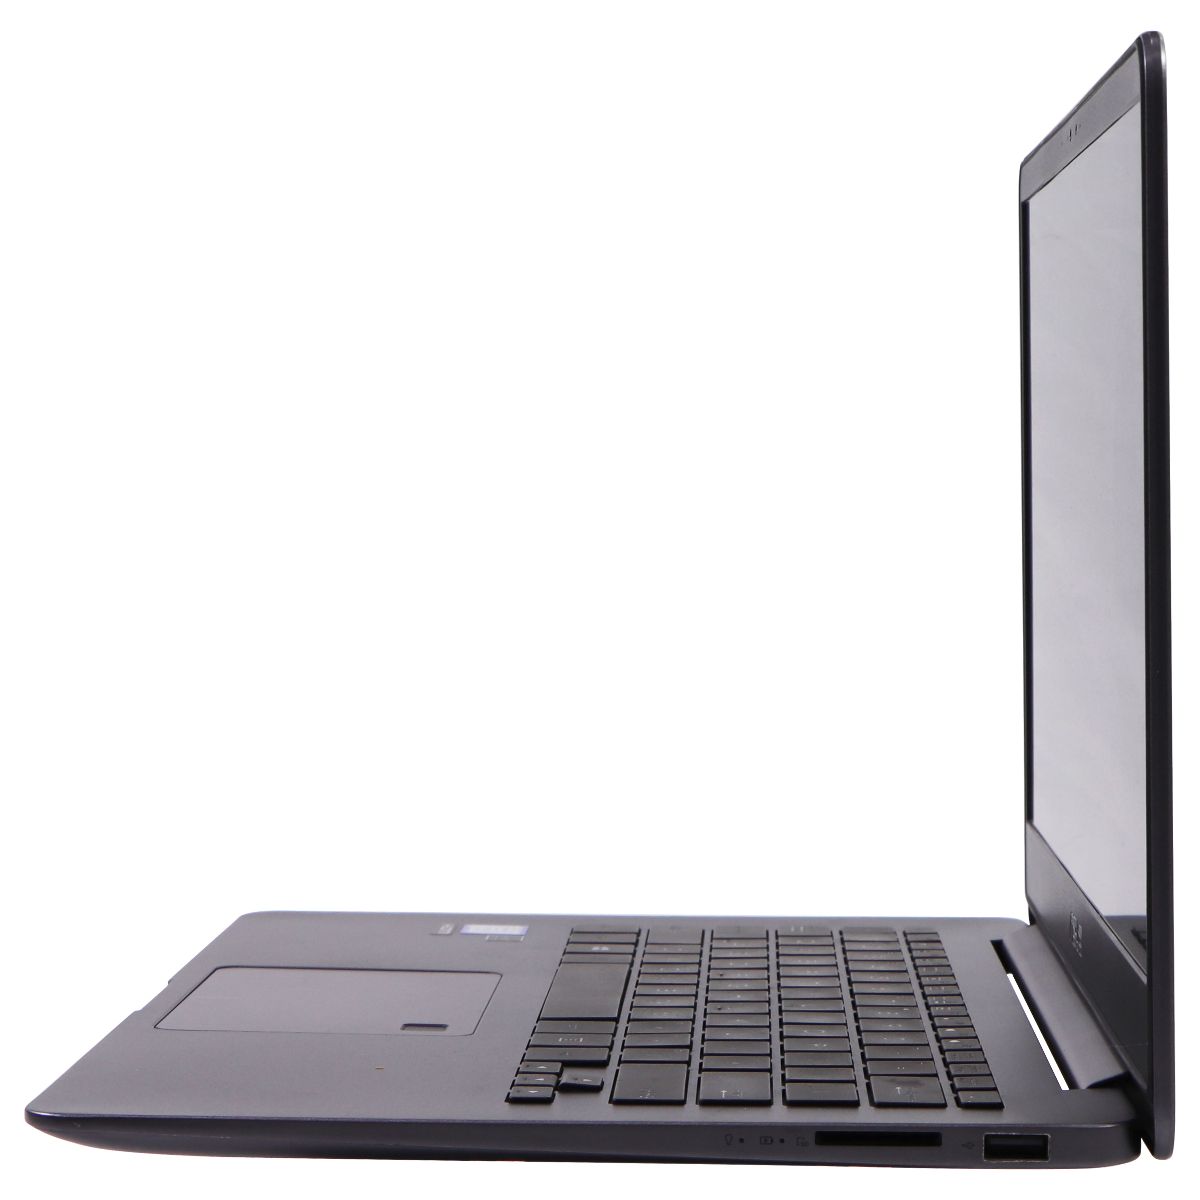 ASUS Zenbook (14-inch) Laptop i7-8550U/16GB RAM/512GB SSD - Quartz Grey (UX430V) Laptops - PC Laptops & Netbooks ASUS    - Simple Cell Bulk Wholesale Pricing - USA Seller